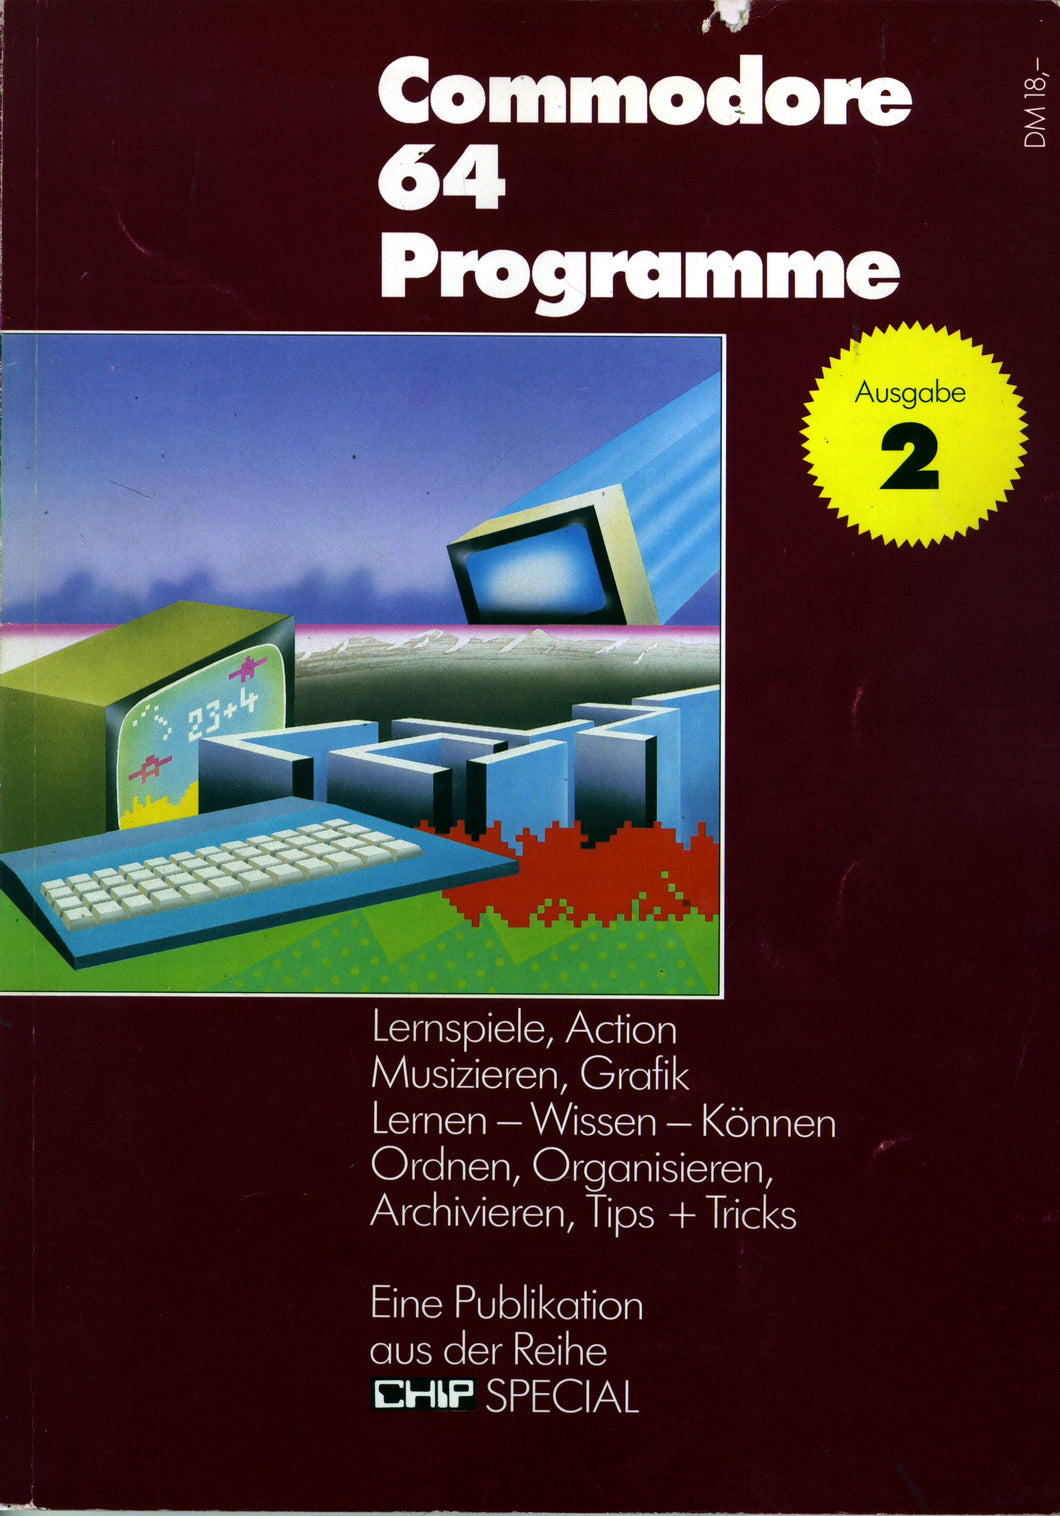 Chip Special Commodore 64 Programme Vorderseite